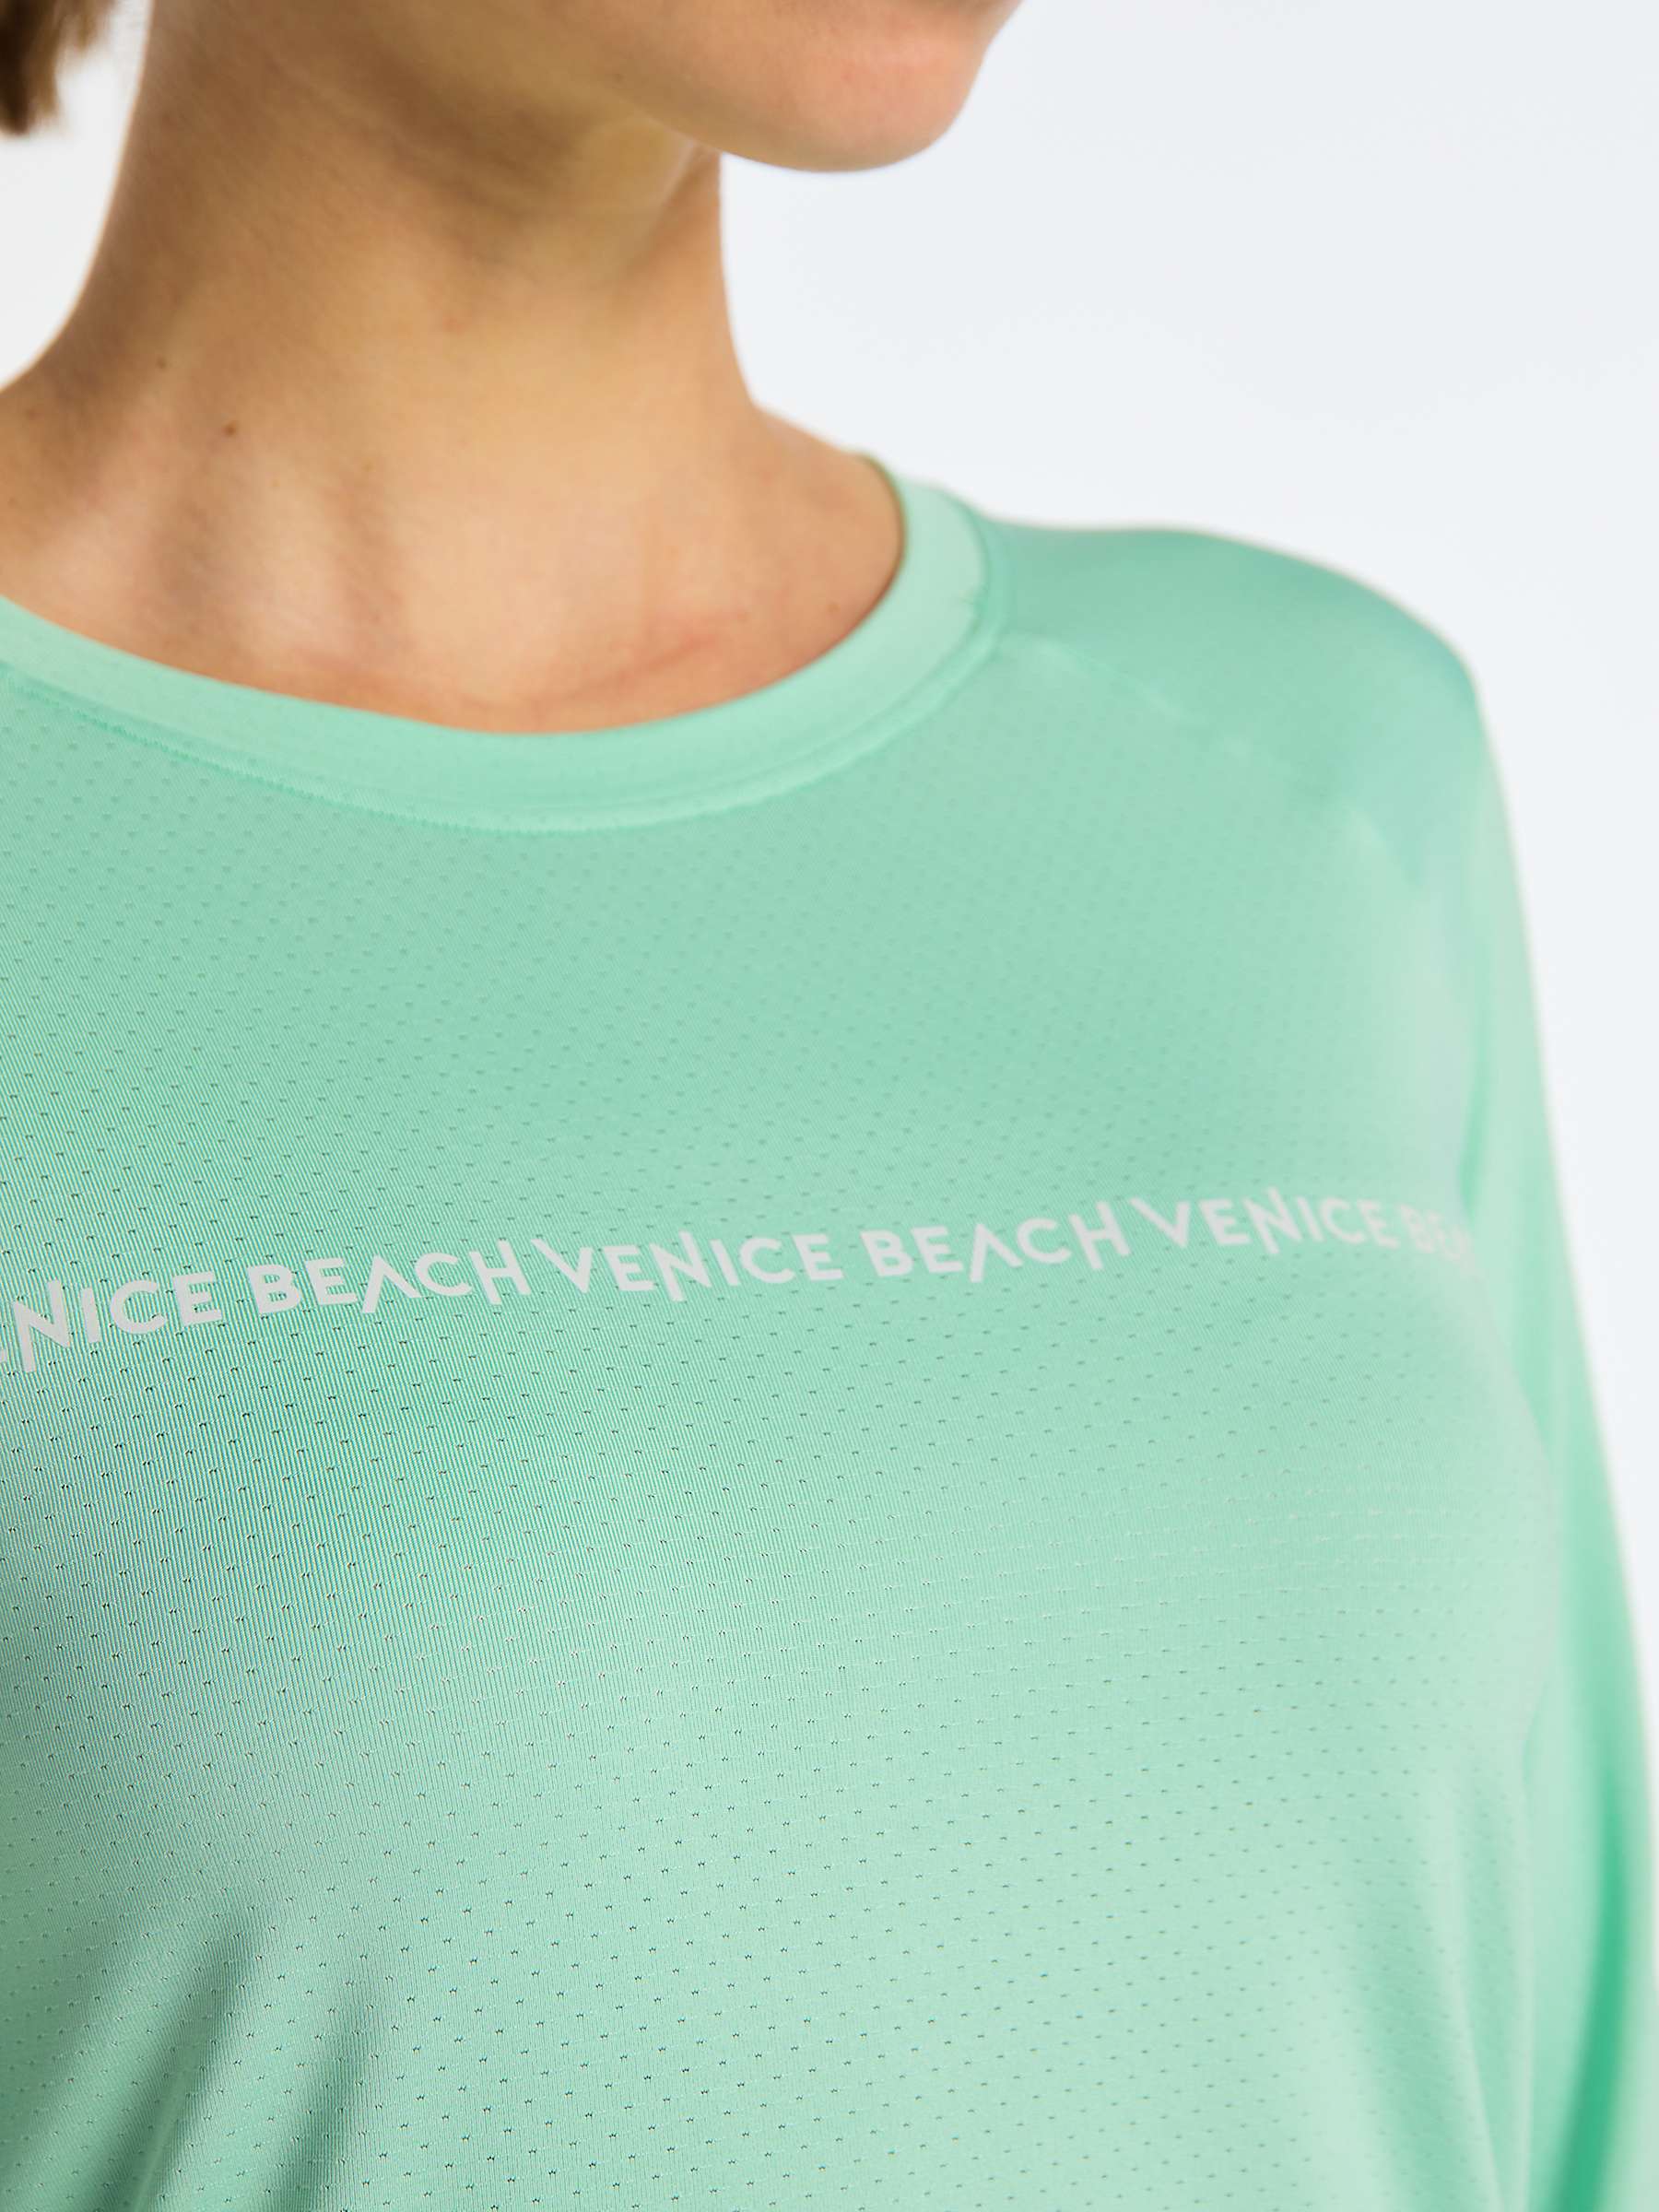 Buy Venice Beach Pittis Top Online at johnlewis.com